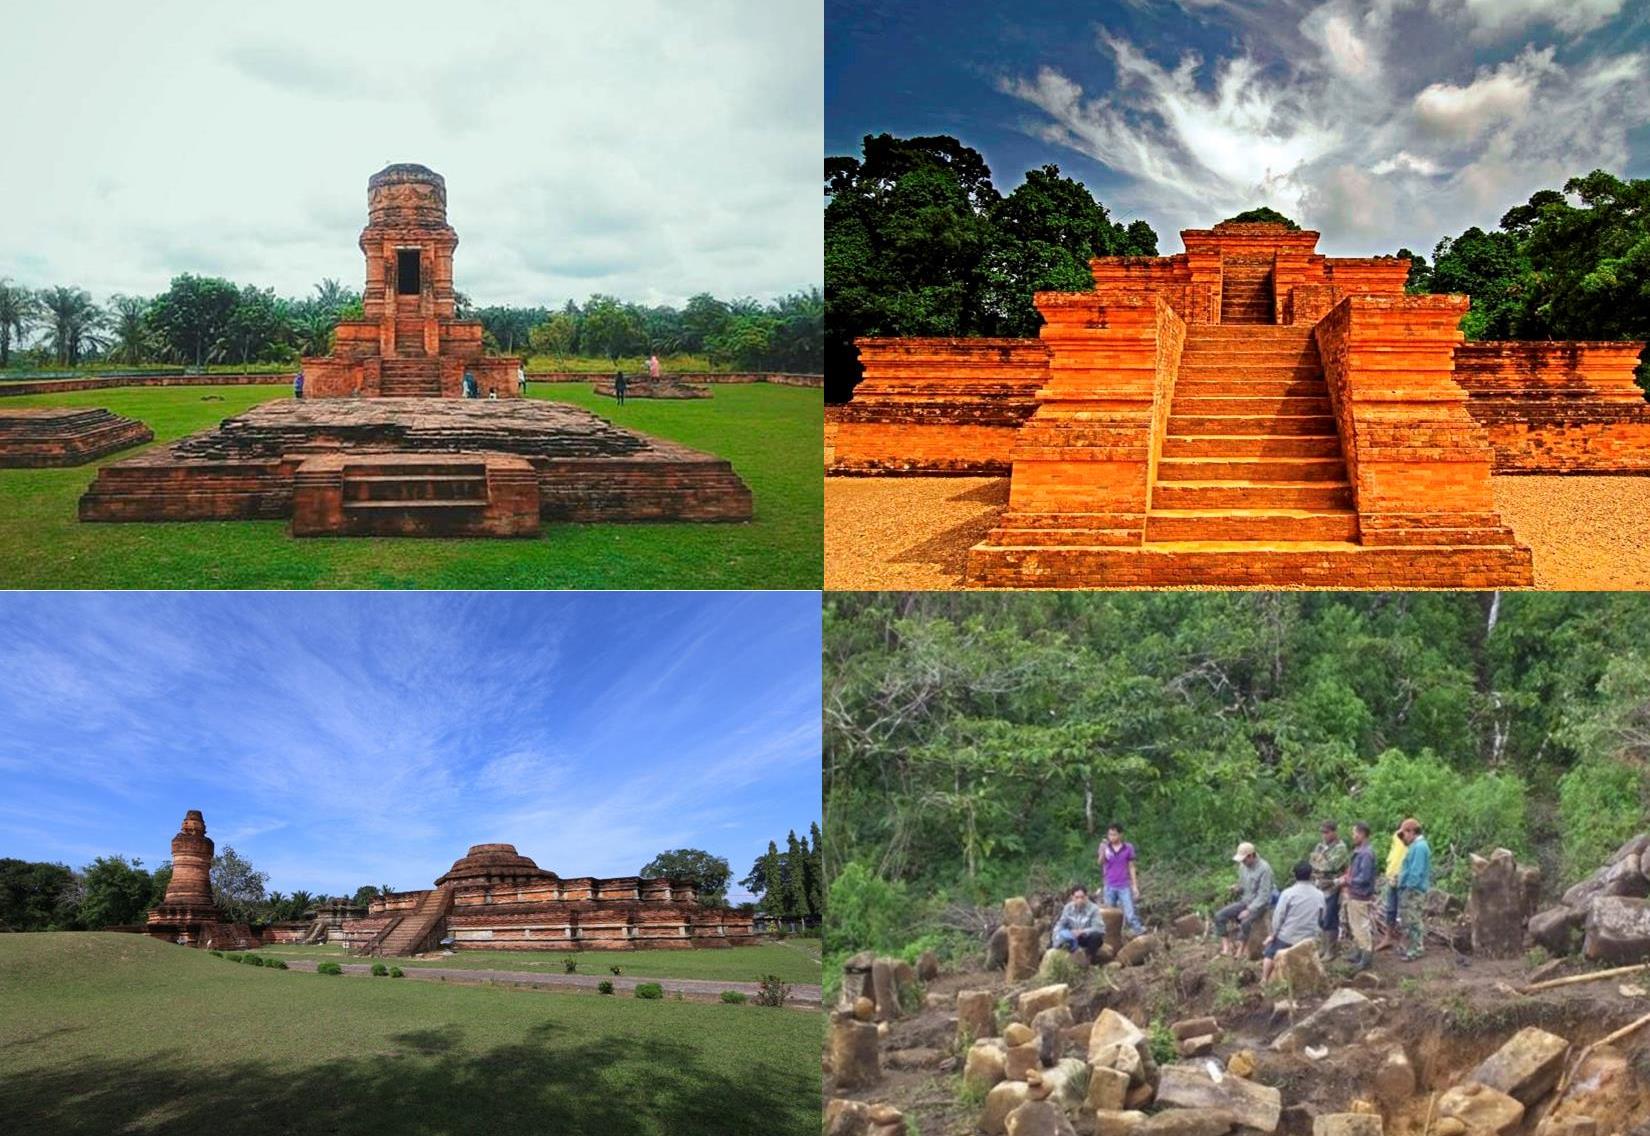 Daftar 10 Peninggalan Paling Bersejarah Kerajaan Sriwijaya Yang Masih Terjaga Hingga Saat Ini!